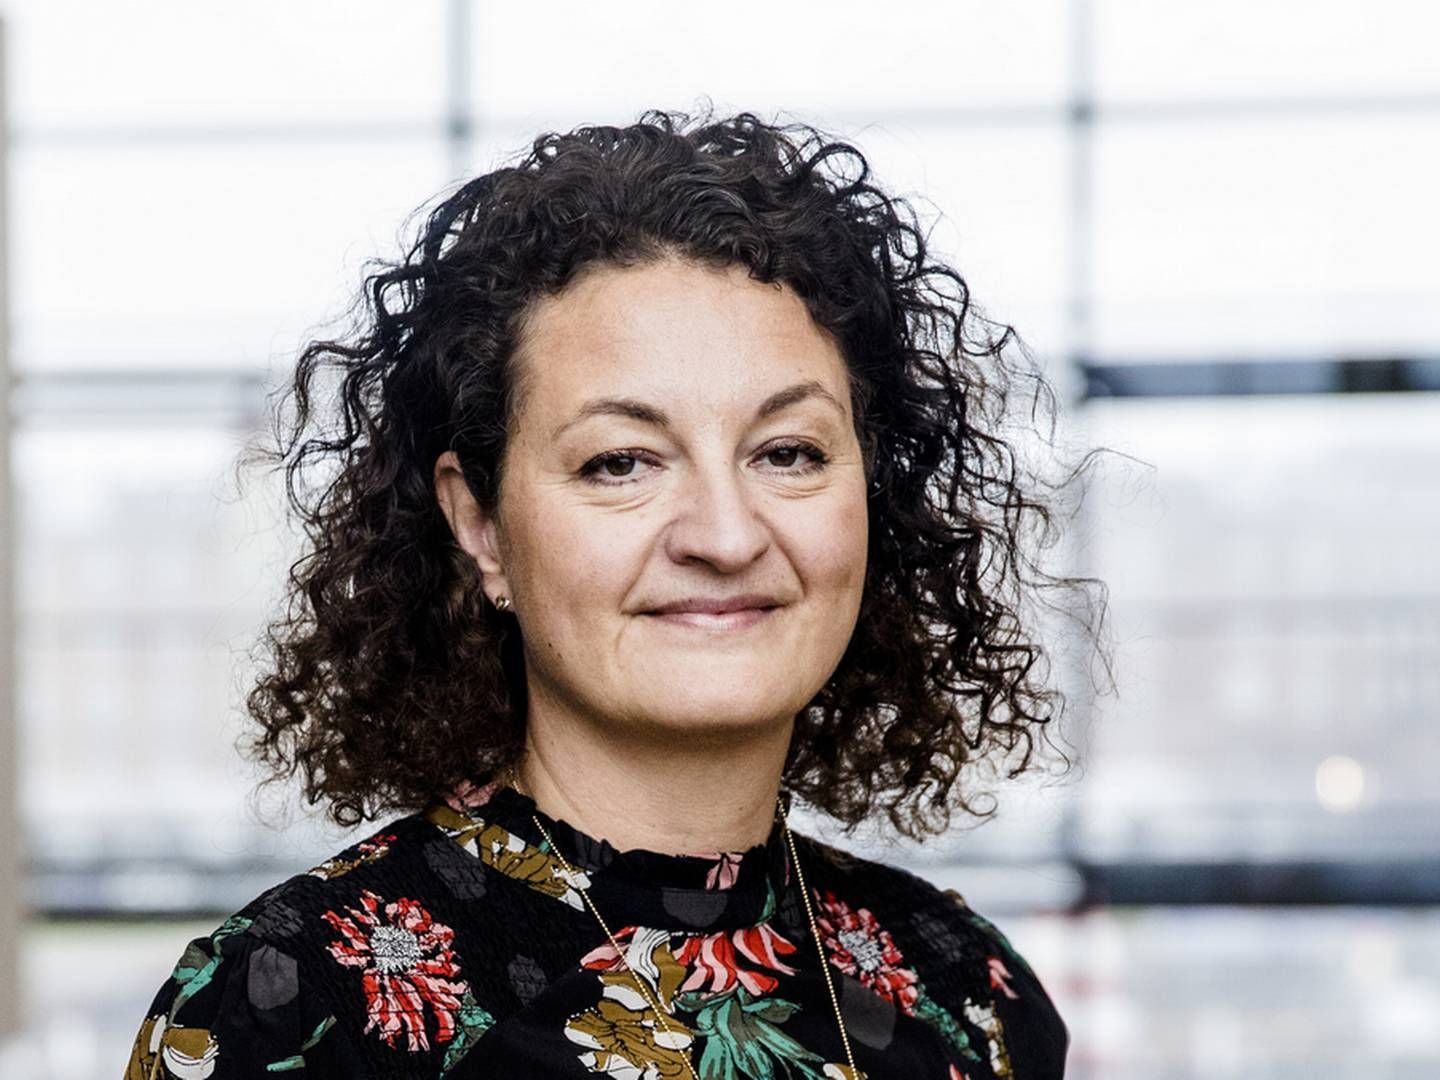 Adm. direktør i Forenet Kredit, Louise Mogensen, er næstformand i tænketanken Demokratisk Erhverv. | Foto: PF/Fornet Kredit